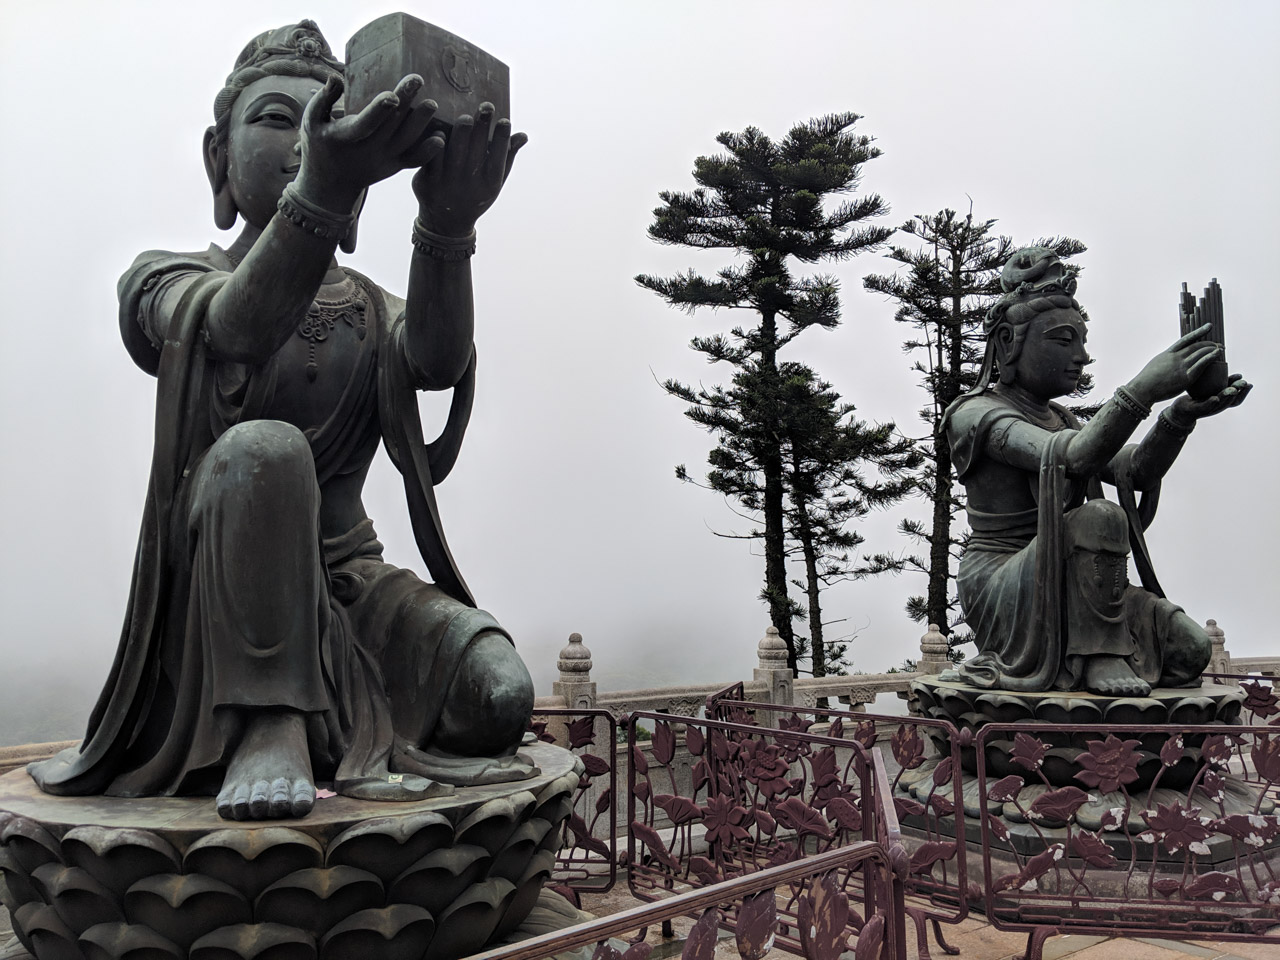 Statues around the Tian Tan Buddha